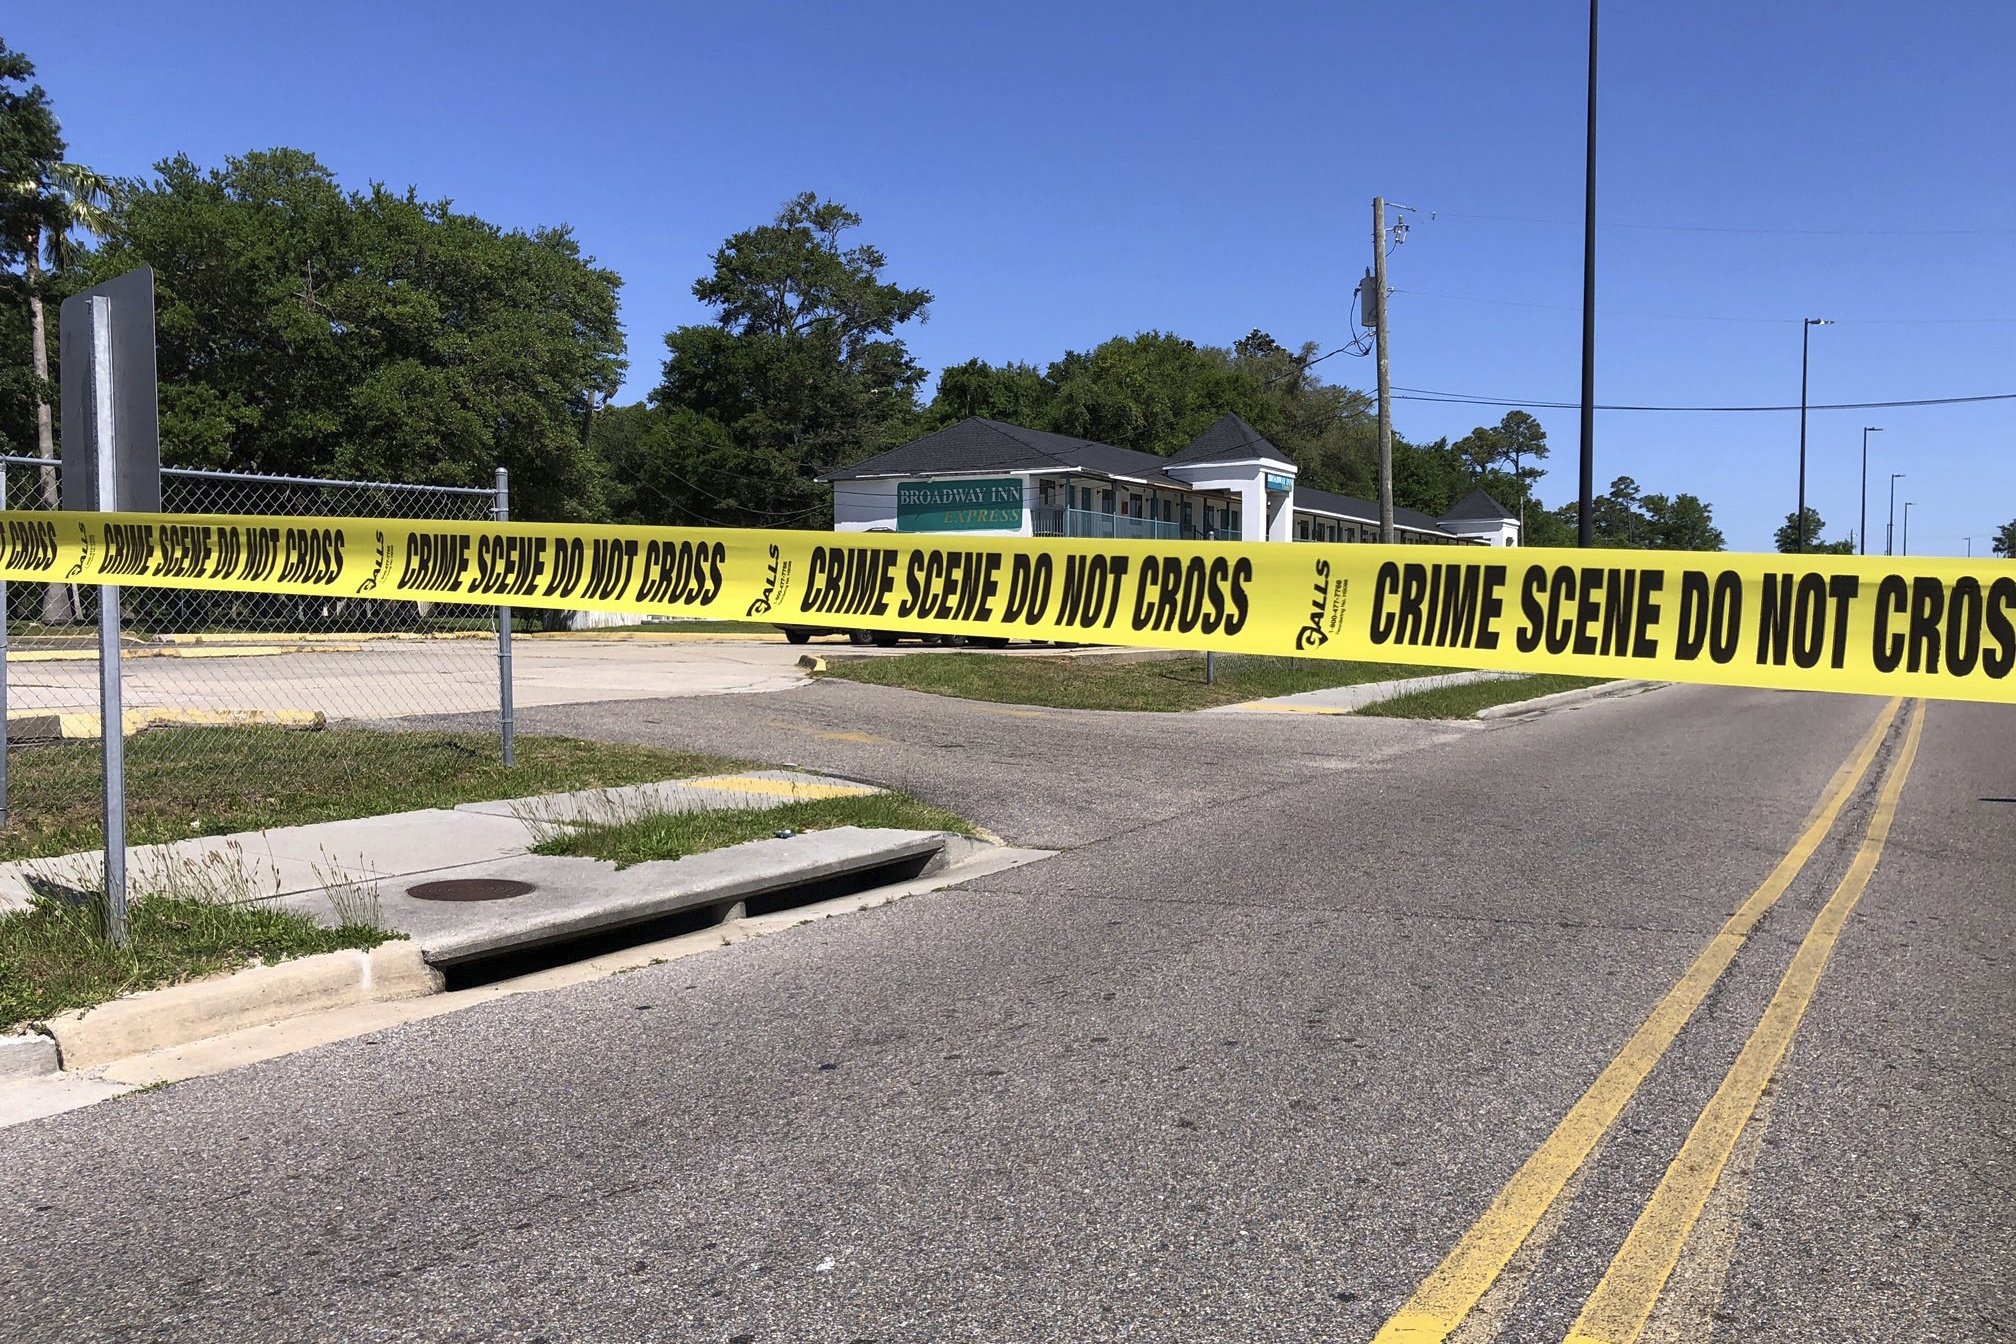 Police at the crime scene tape sections off the area surrounding the Biloxi Broadway Inn Express, Biloxi, Miss., U.S., April 27, 2022. (Photo via AP)